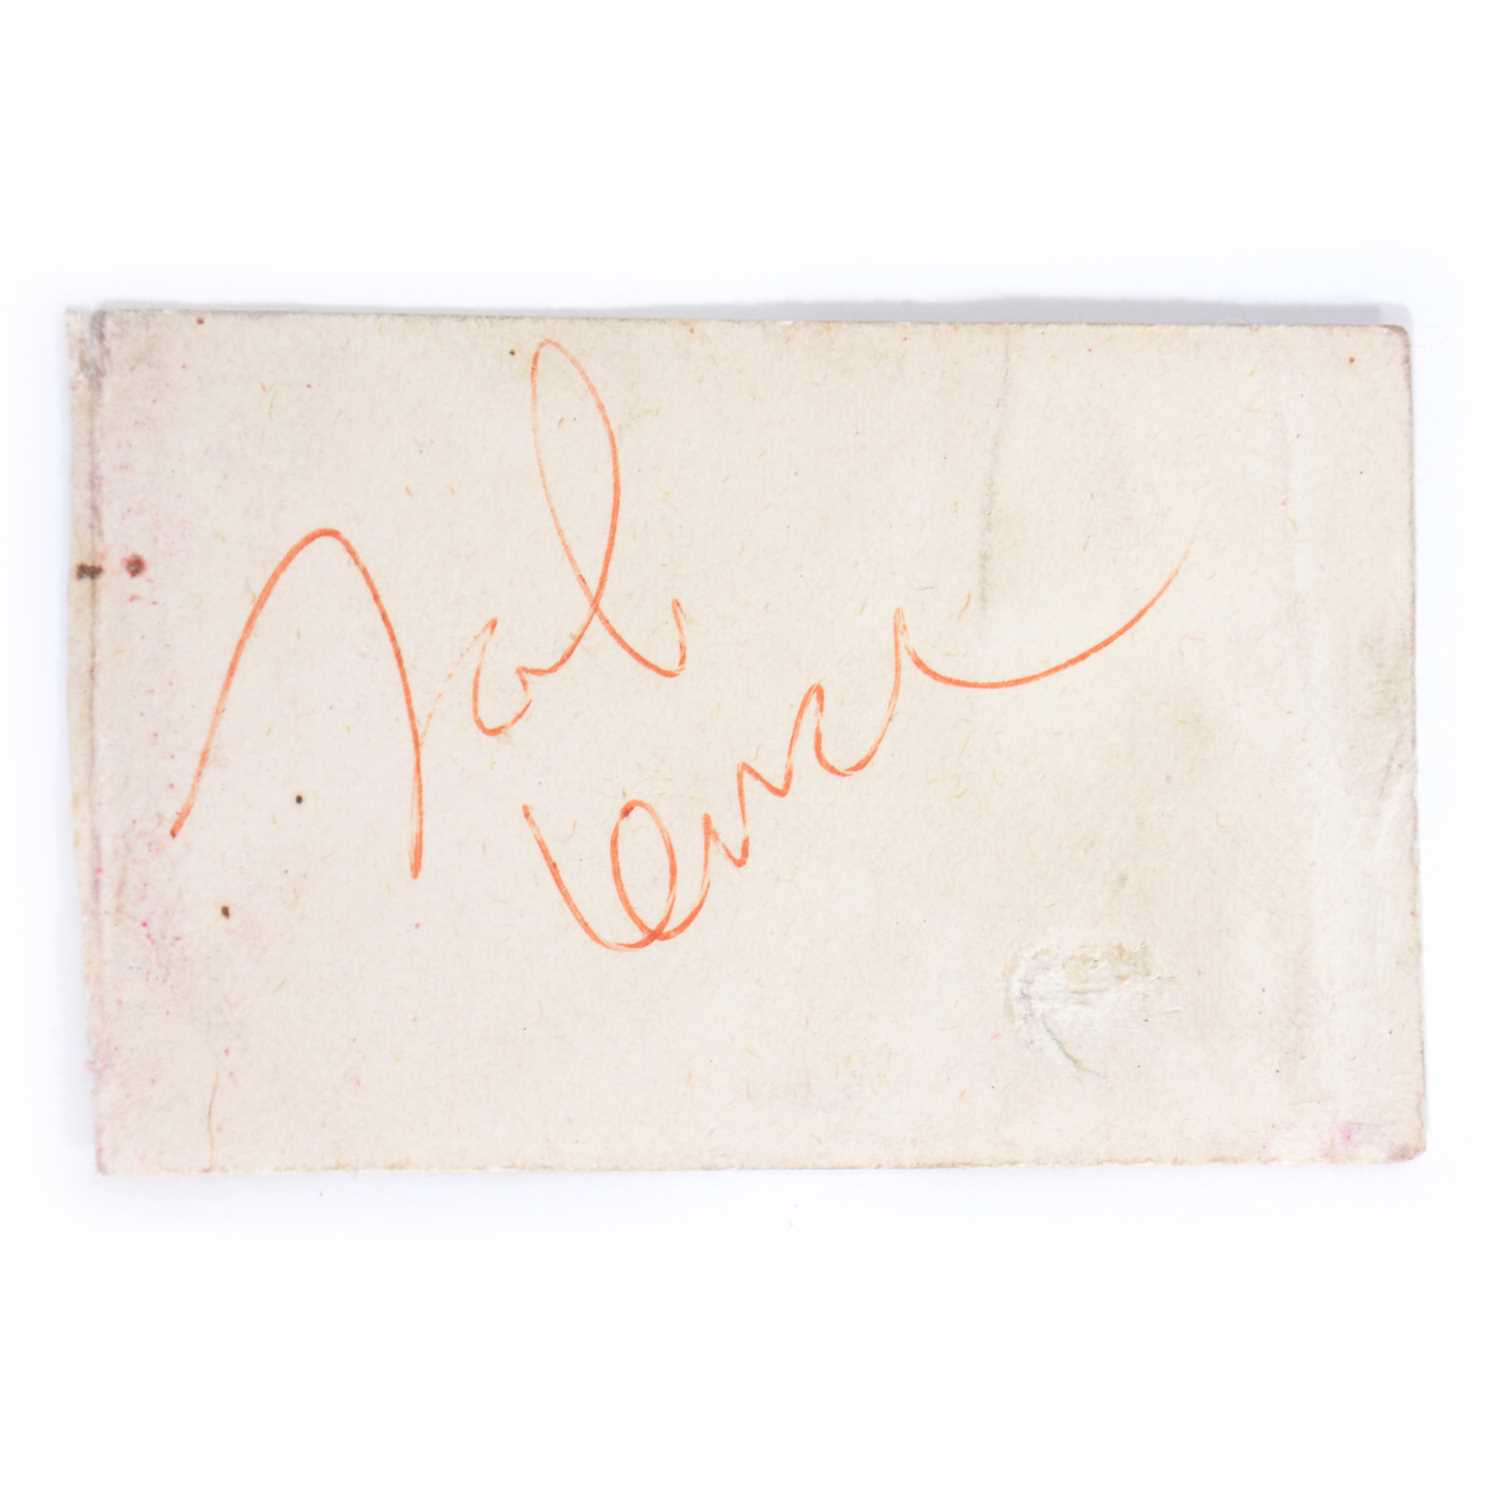 Lot 4 - John Lennon - The Beatles, signature on cream paper